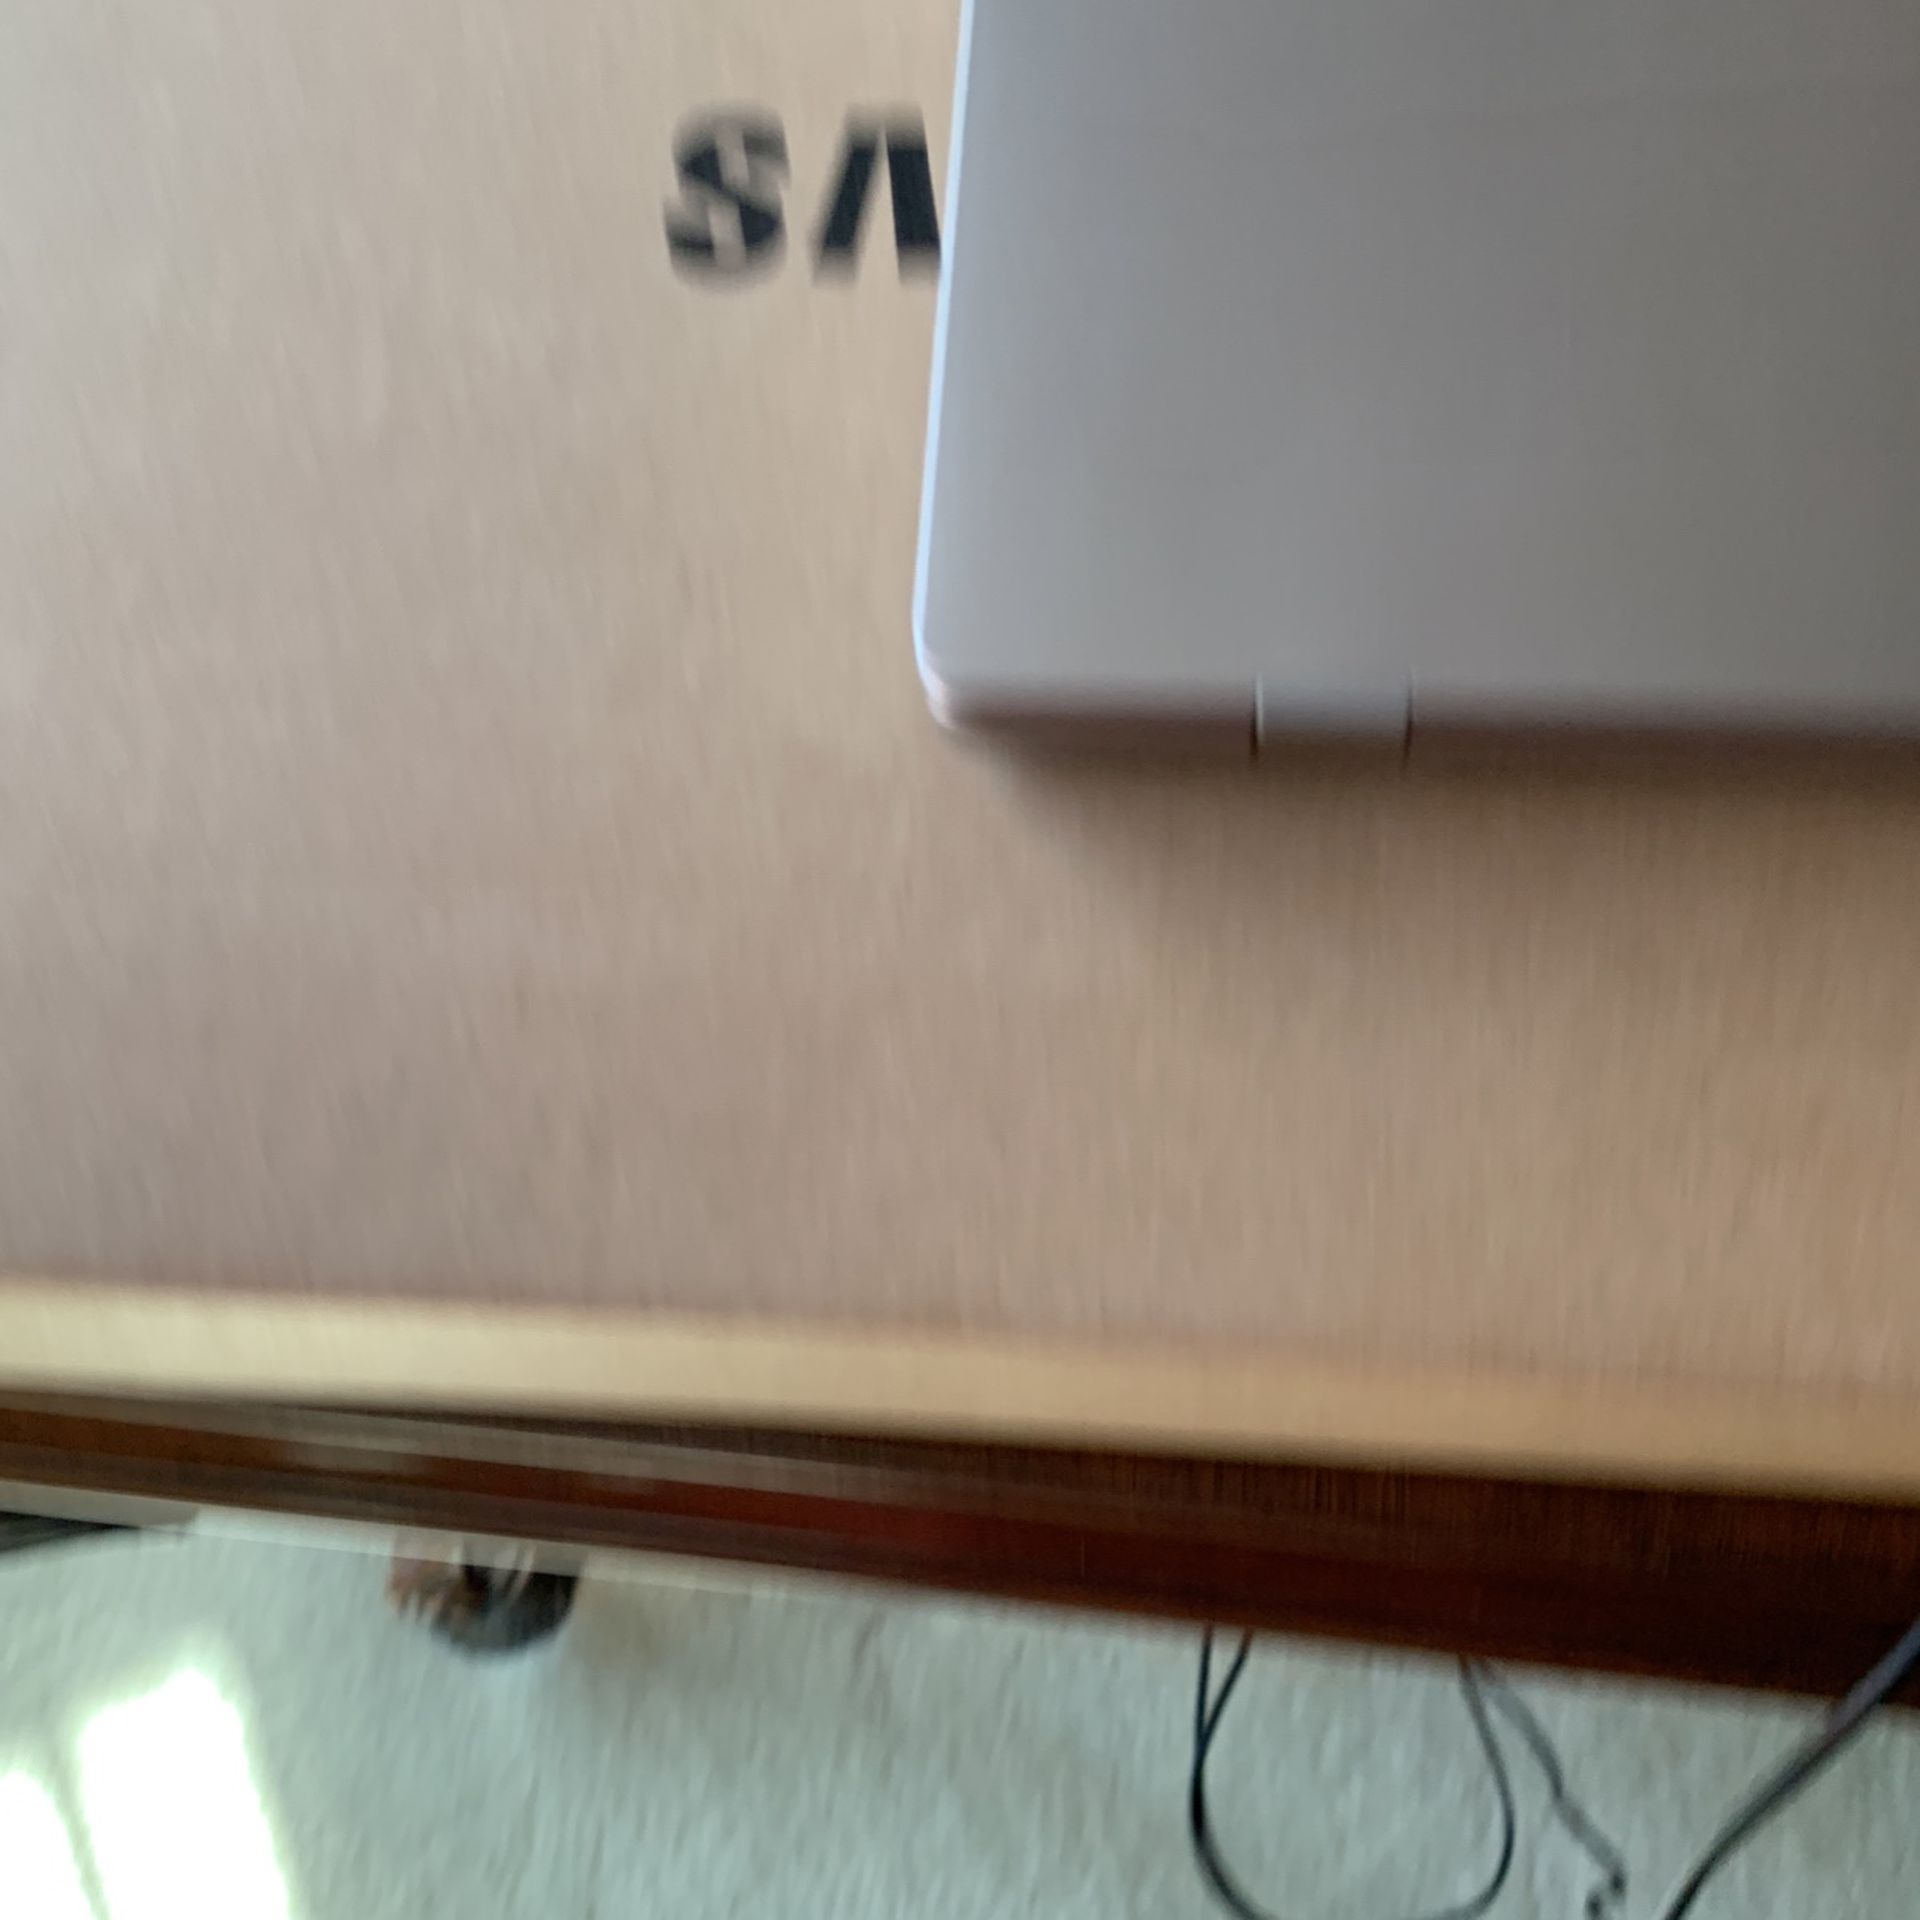 Samsung Chromebook 4 $140 Obo